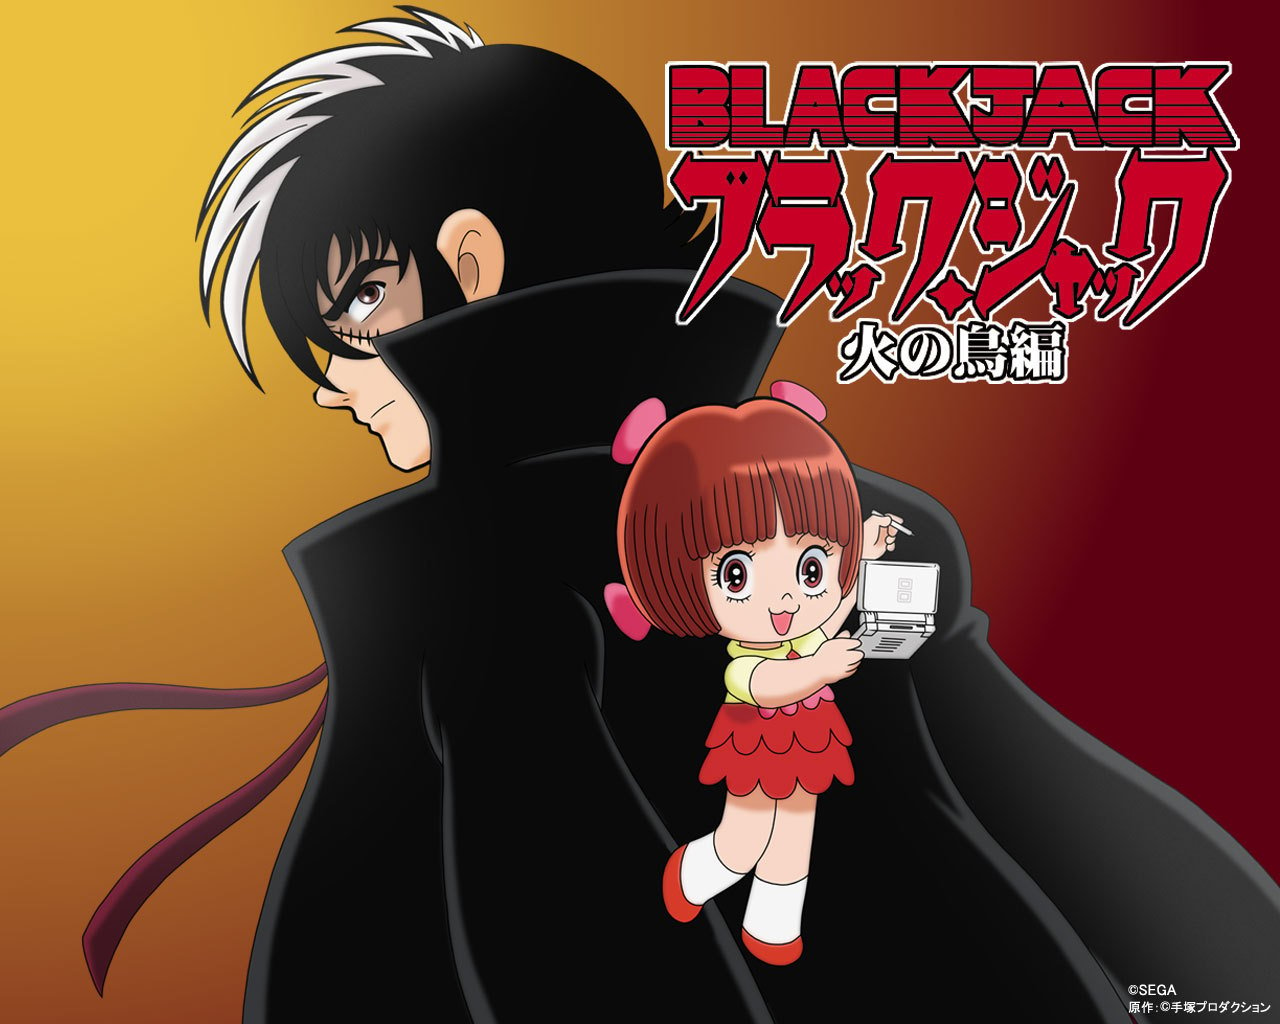 Black Jack - Clinical Chart Box Set (DVD, 2004, 3-Disc Set) OVA anime  719987241824 | eBay